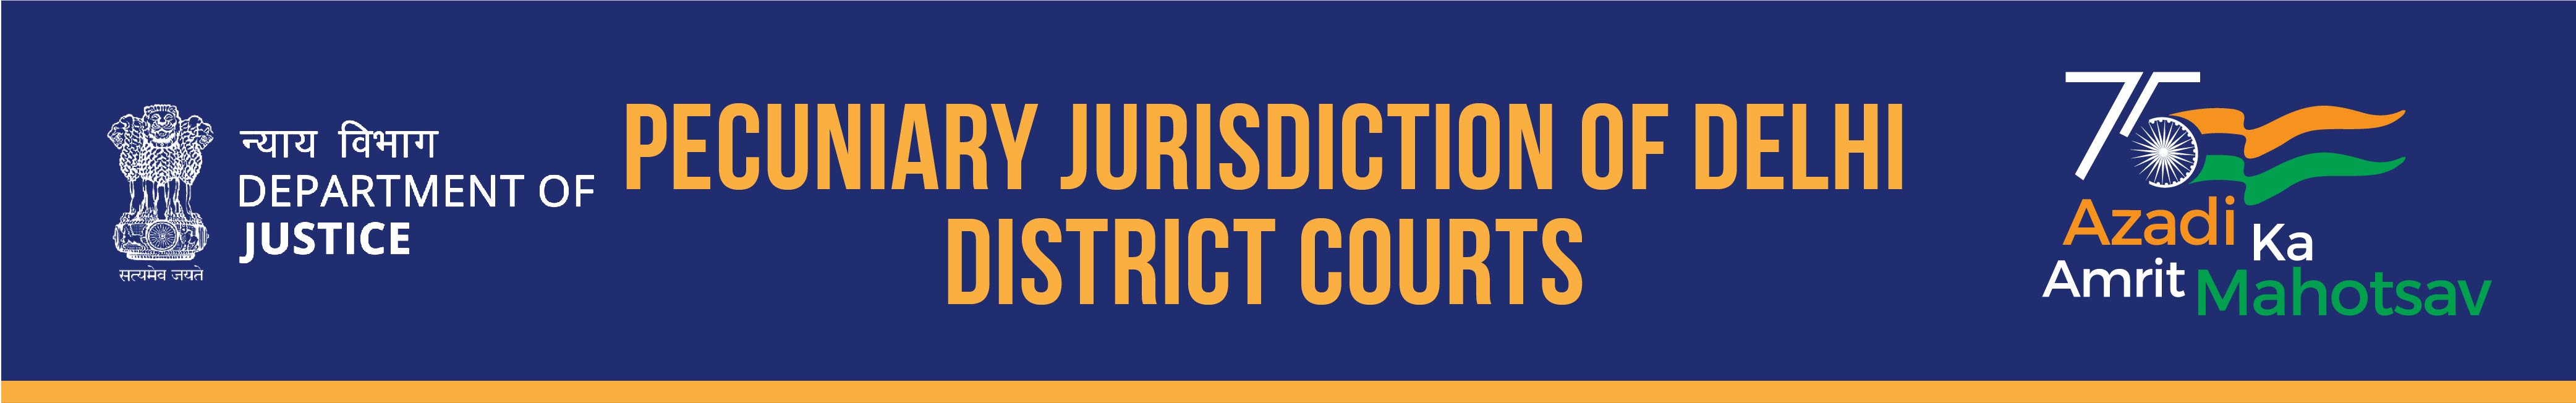 Pecuniary Jurisdiction of Delhi District Courts